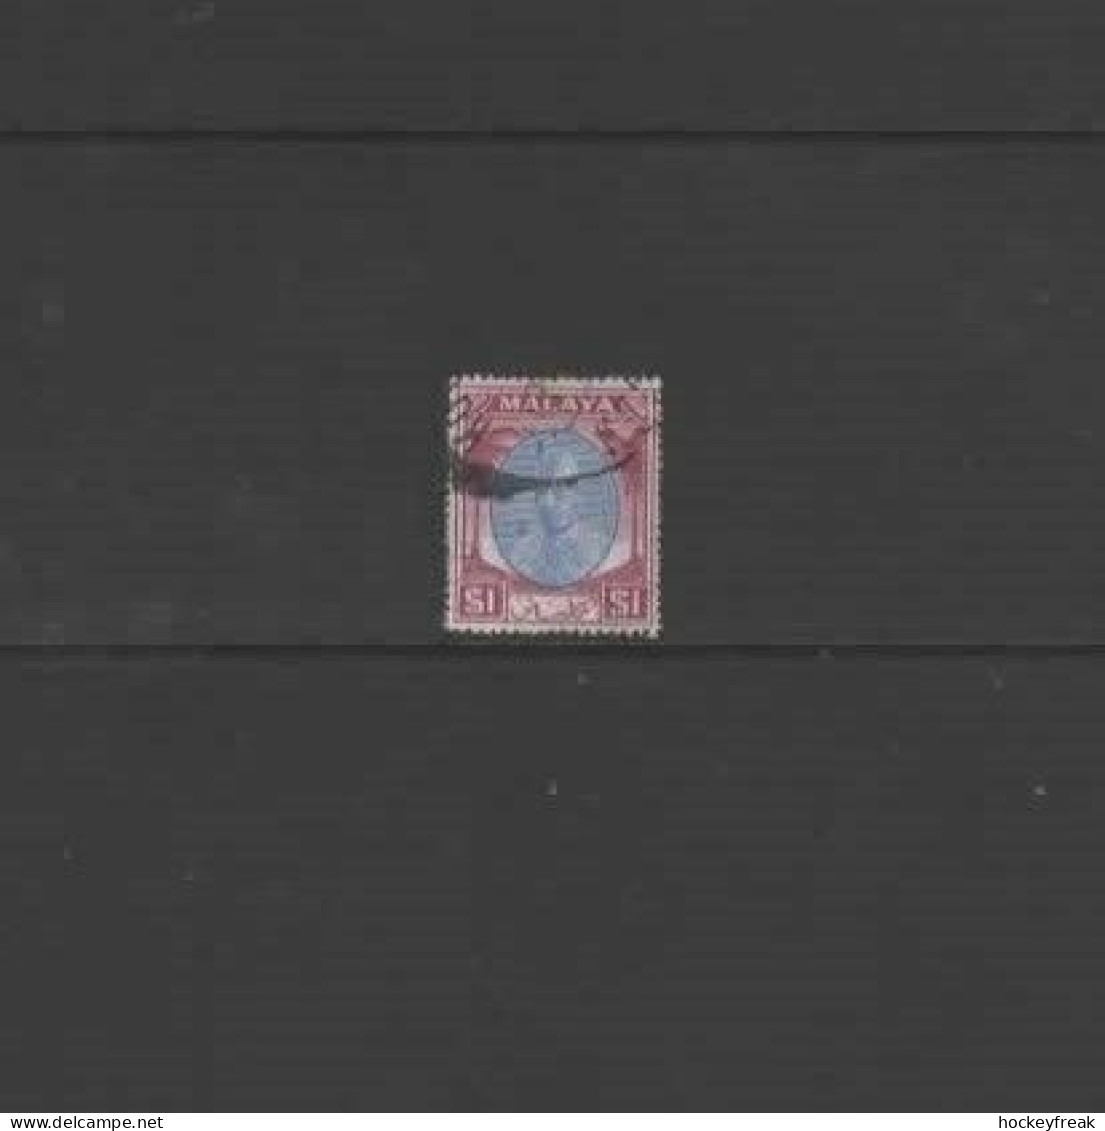 Malayan States - Kelantan 1951 - $1 Blue & Purple SG79 GU Cat £19 SG2023 - Kelantan